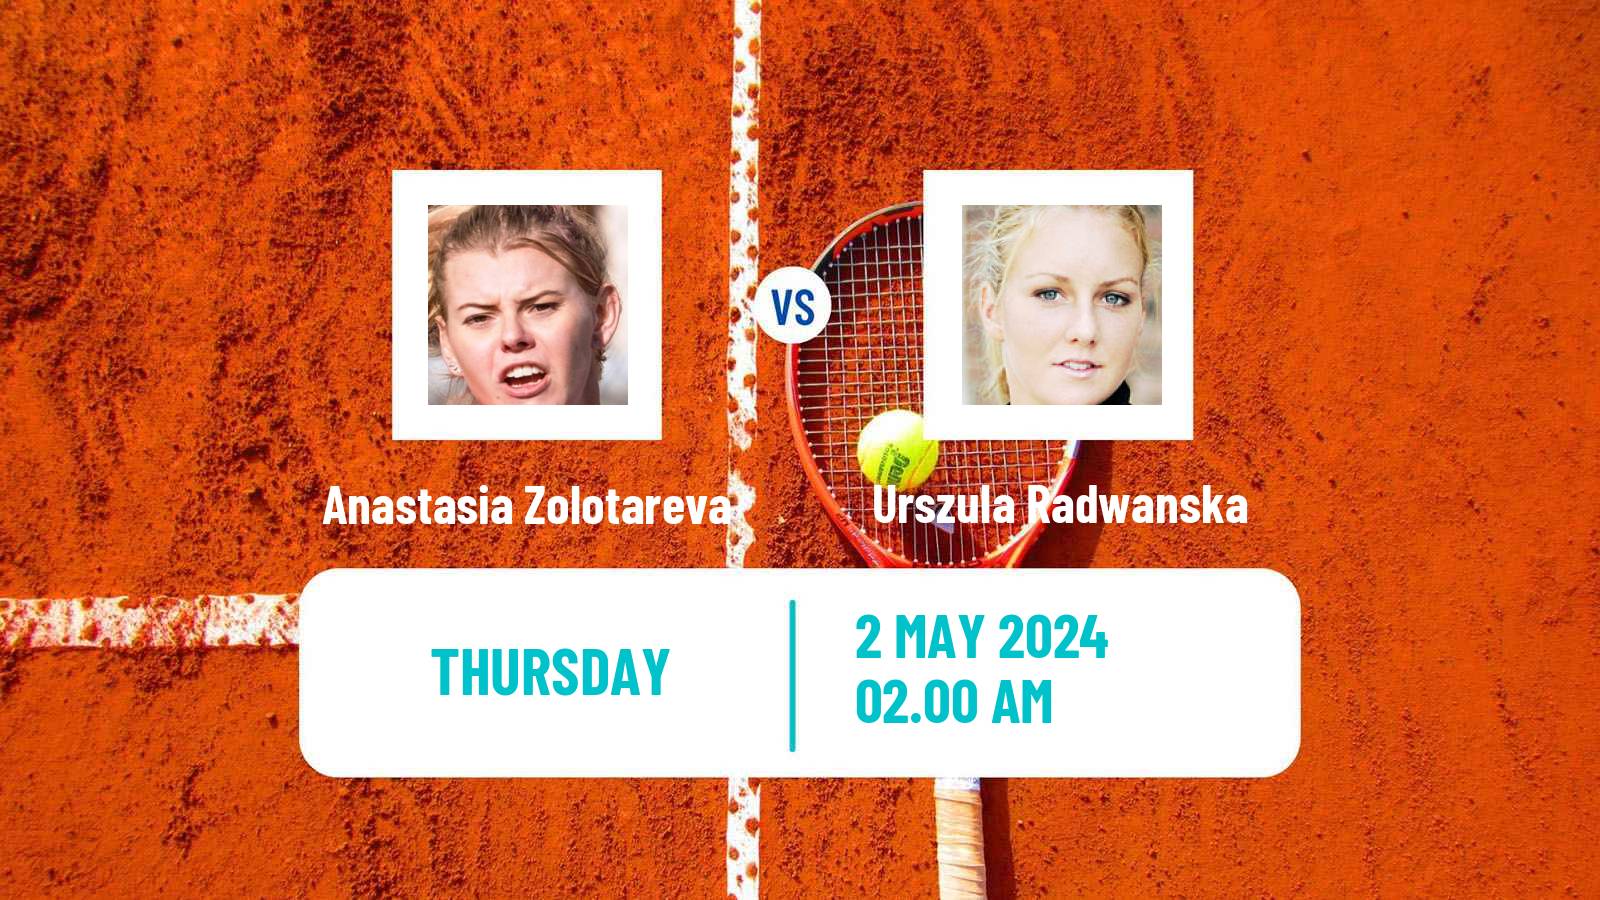 Tennis ITF W50 Lopota 2 Women Anastasia Zolotareva - Urszula Radwanska